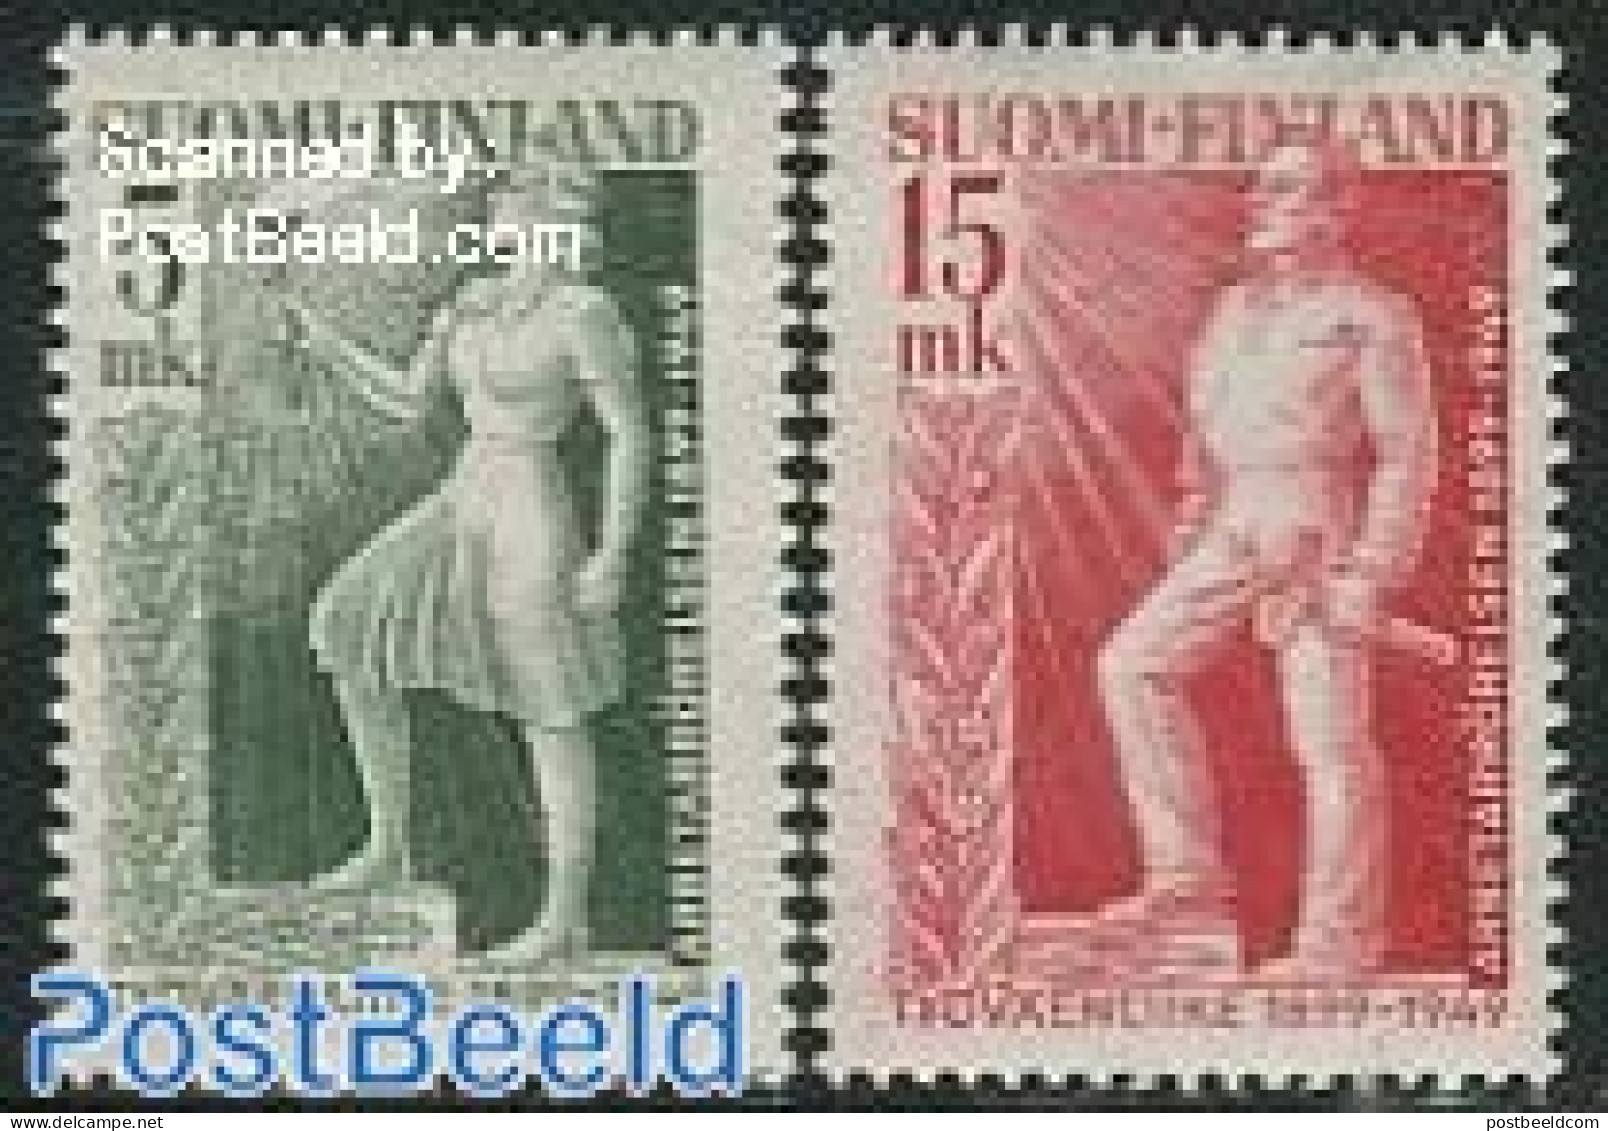 Finland 1949 Labour Association 2v, Mint NH - Unused Stamps